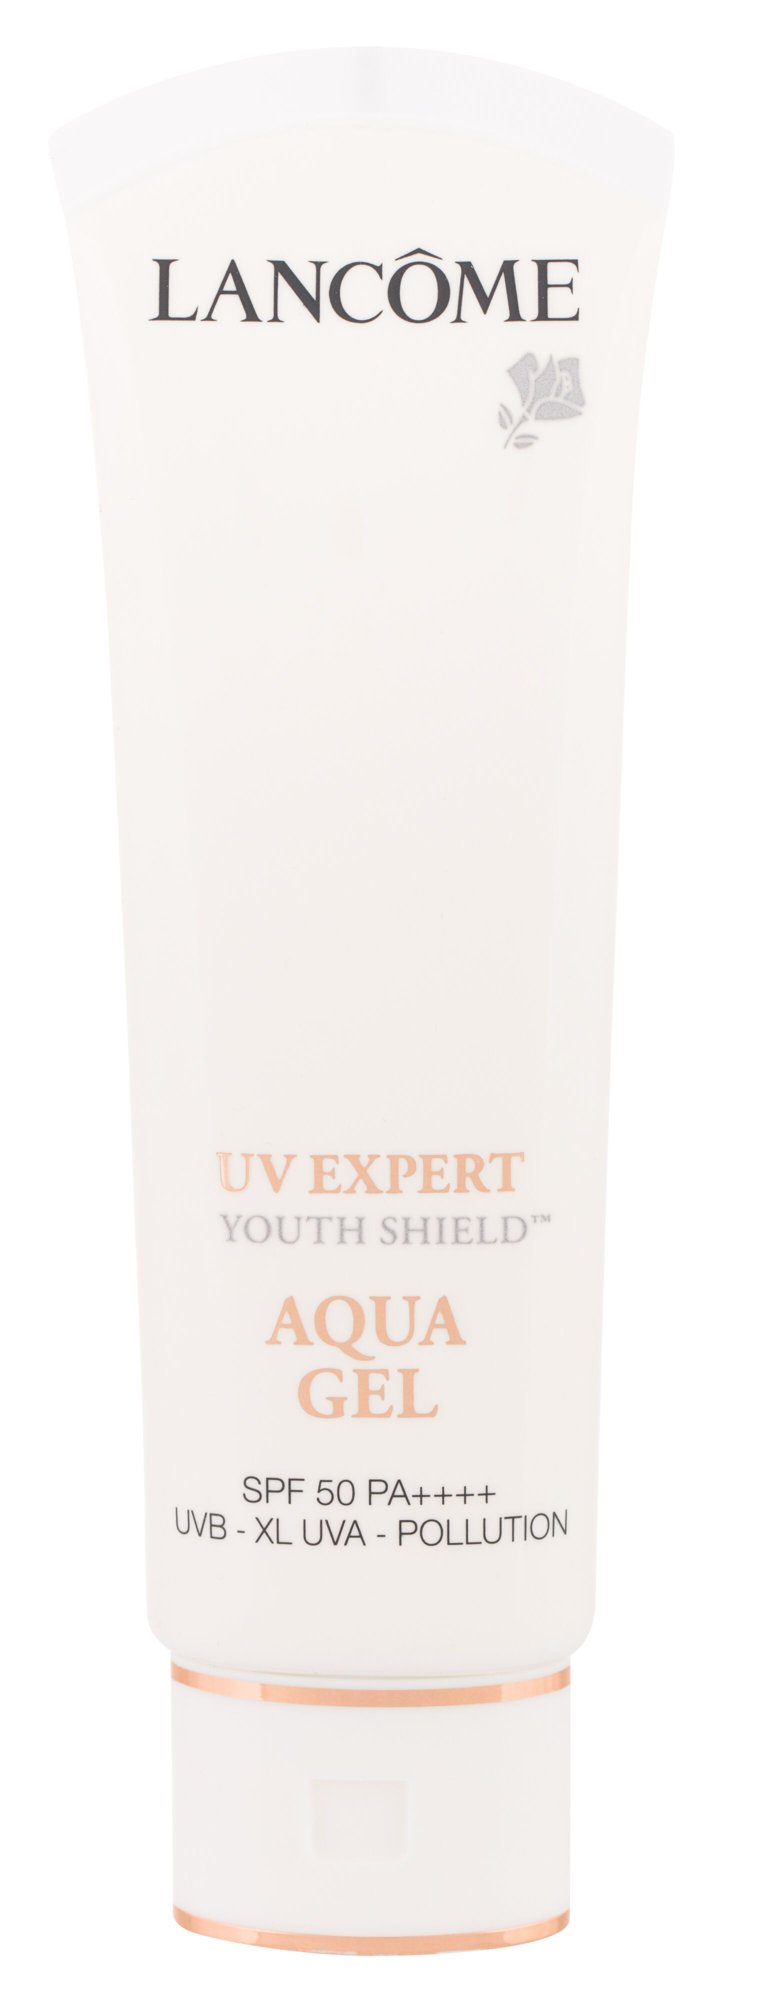 Lancome UV Expert Youth Shield veido apsauga